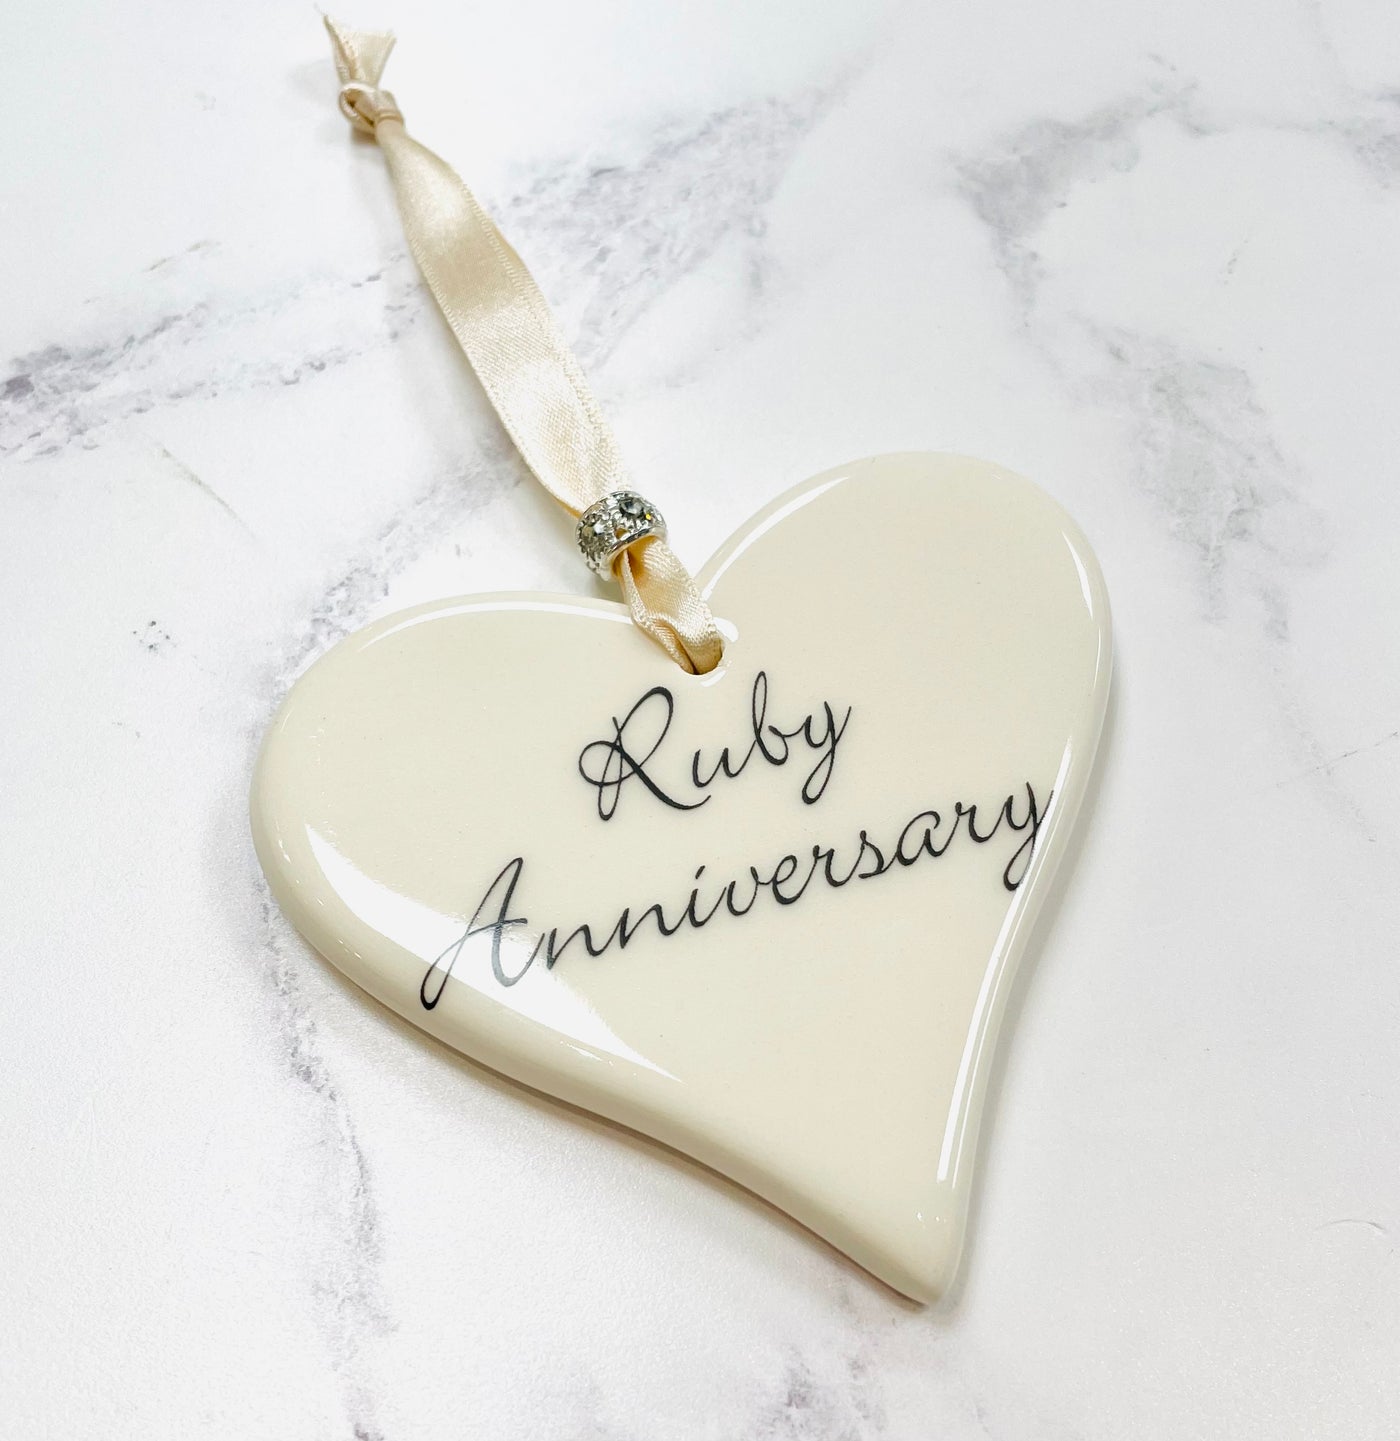 Dimbleby Ceramics LARGE Sentiment Hanging Heart - Ruby Anniversary